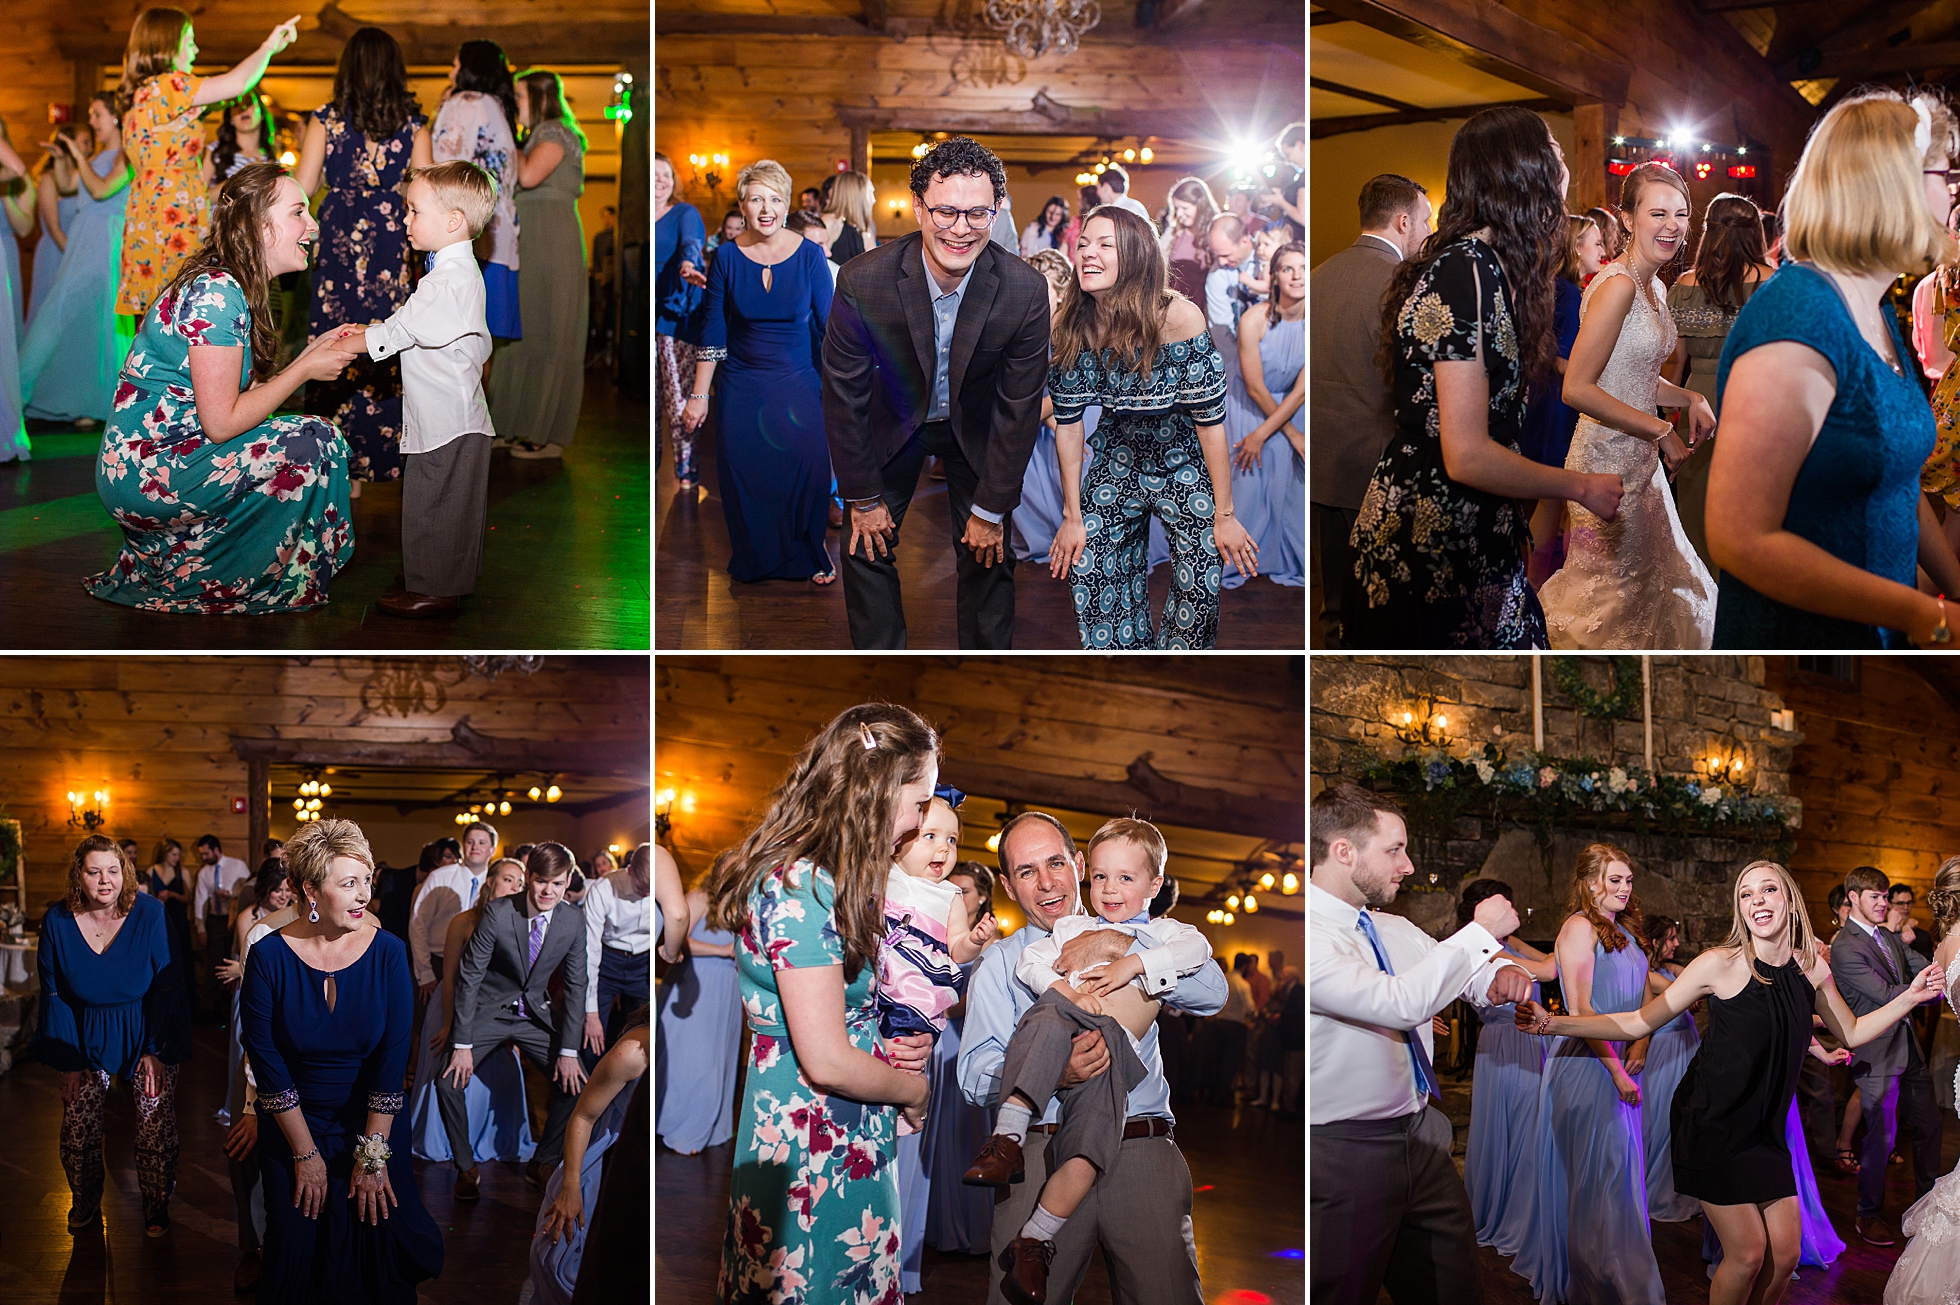 dancing photos indigo falls wedding reception